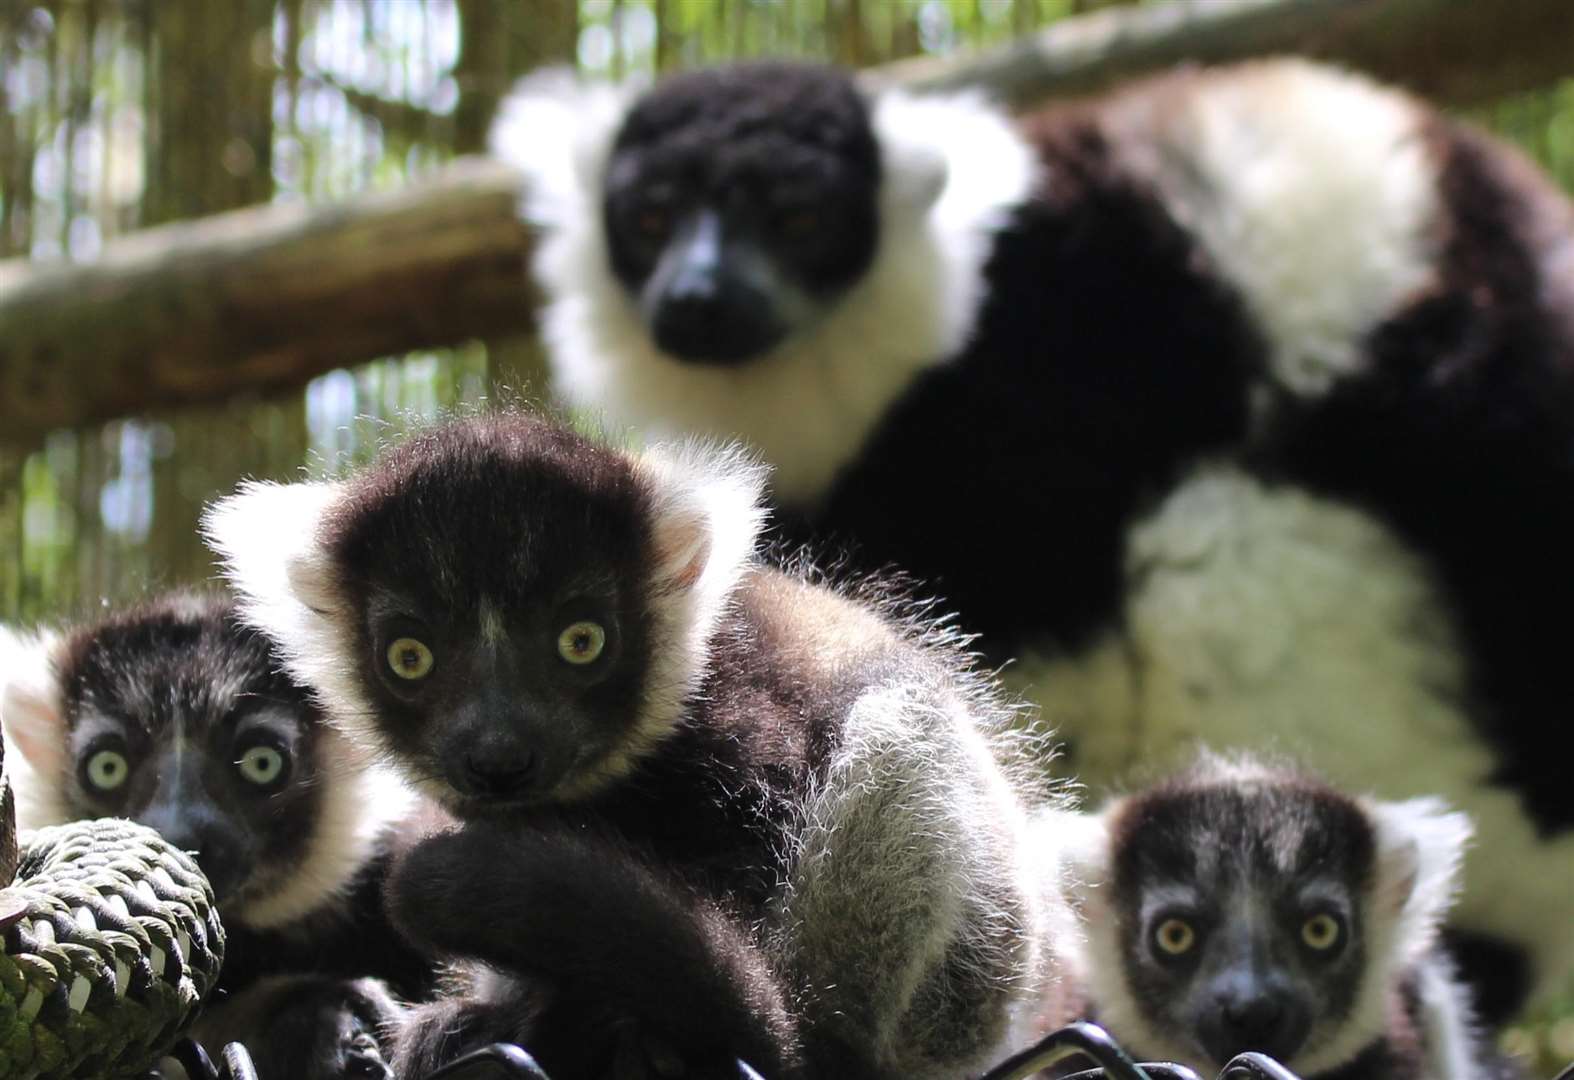 The lemur infants at Pork Lympne. Credit: Port Lympne (2352767)